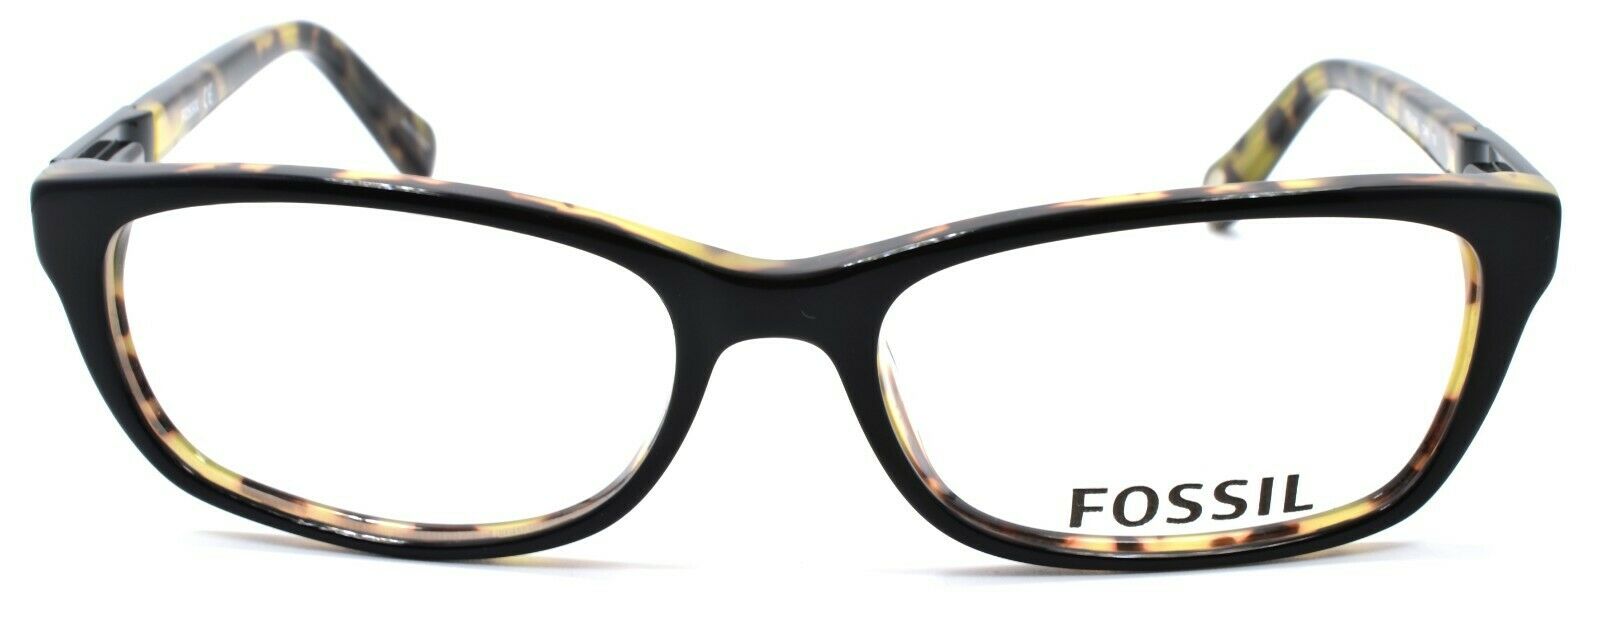 2-Fossil FOS 6049 CW6 Women's Eyeglasses Frames 51-16-135 Black / Havana-716737697887-IKSpecs